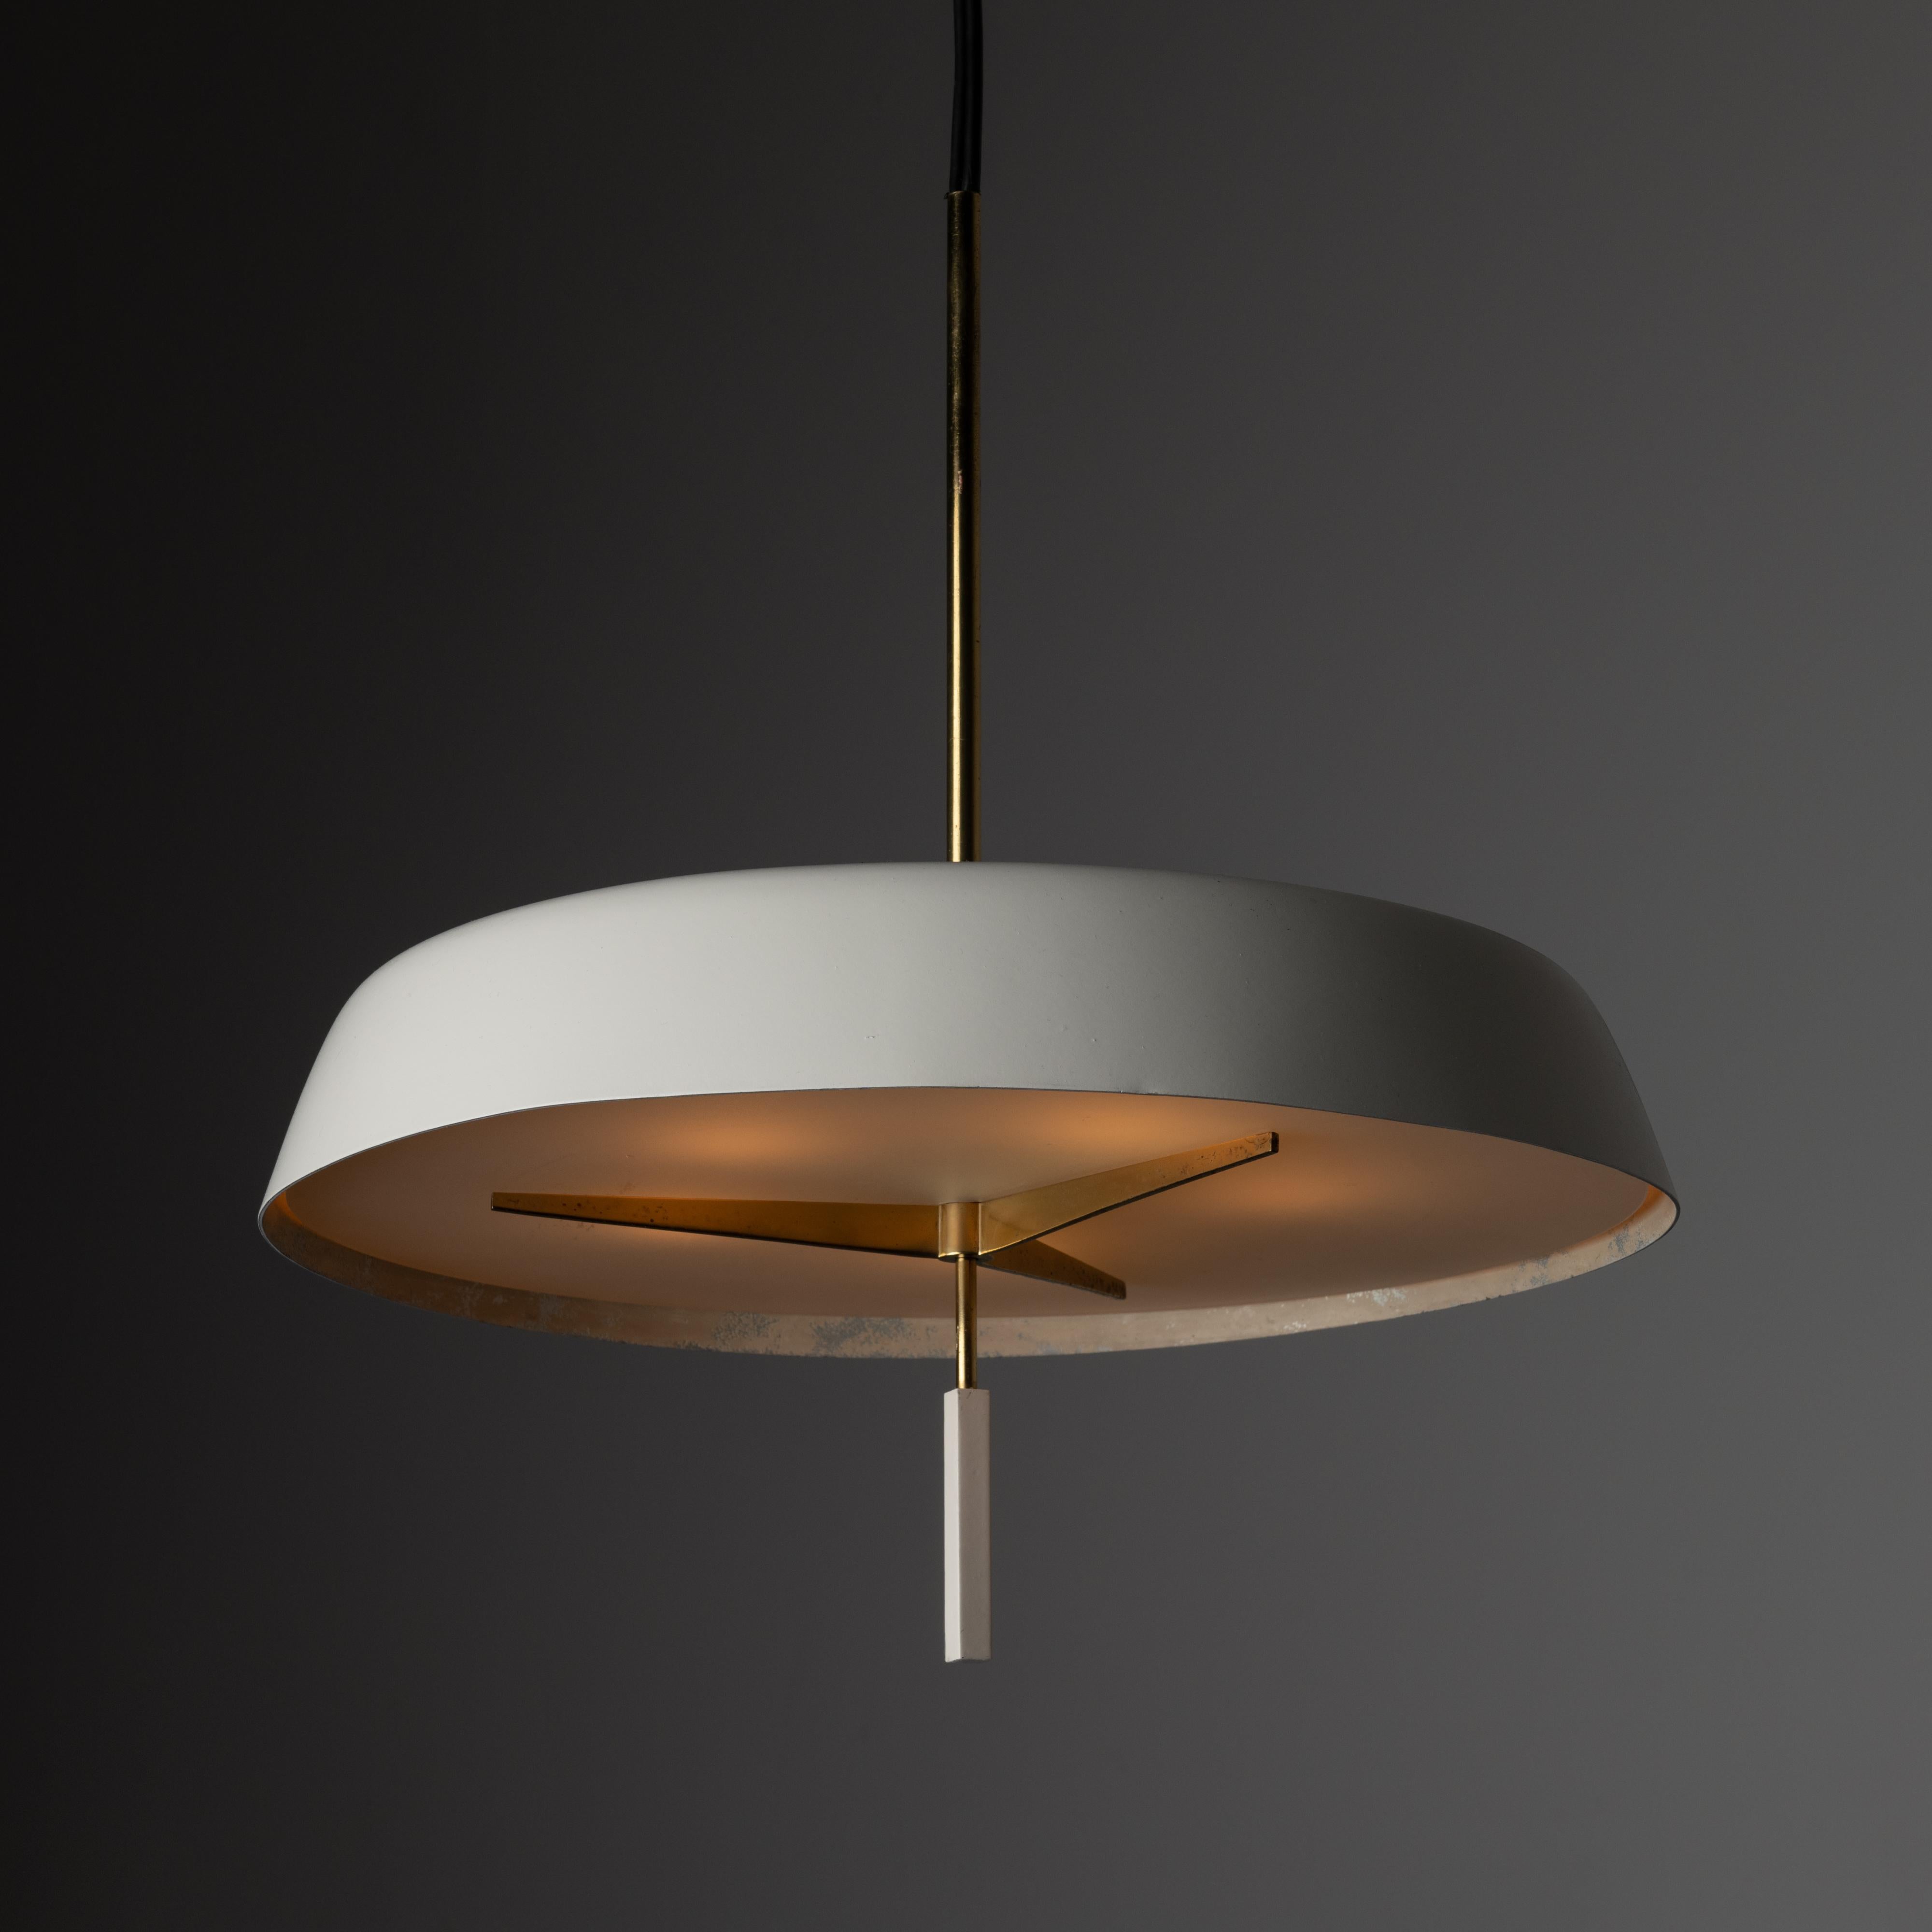 Mid-Century Modern Suspension Light by Stilnovo For Sale